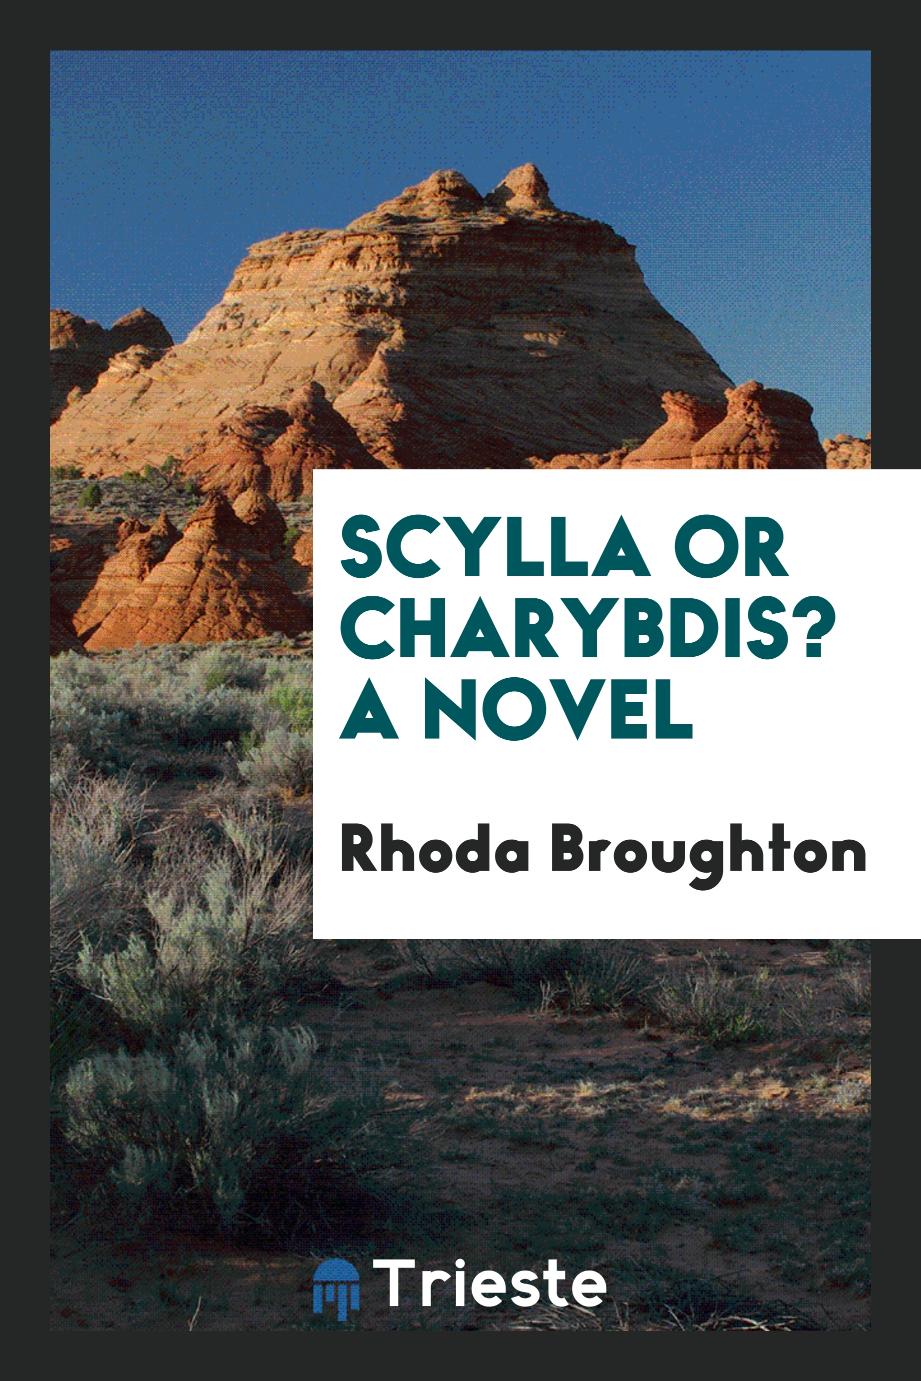 Scylla or Charybdis? A novel